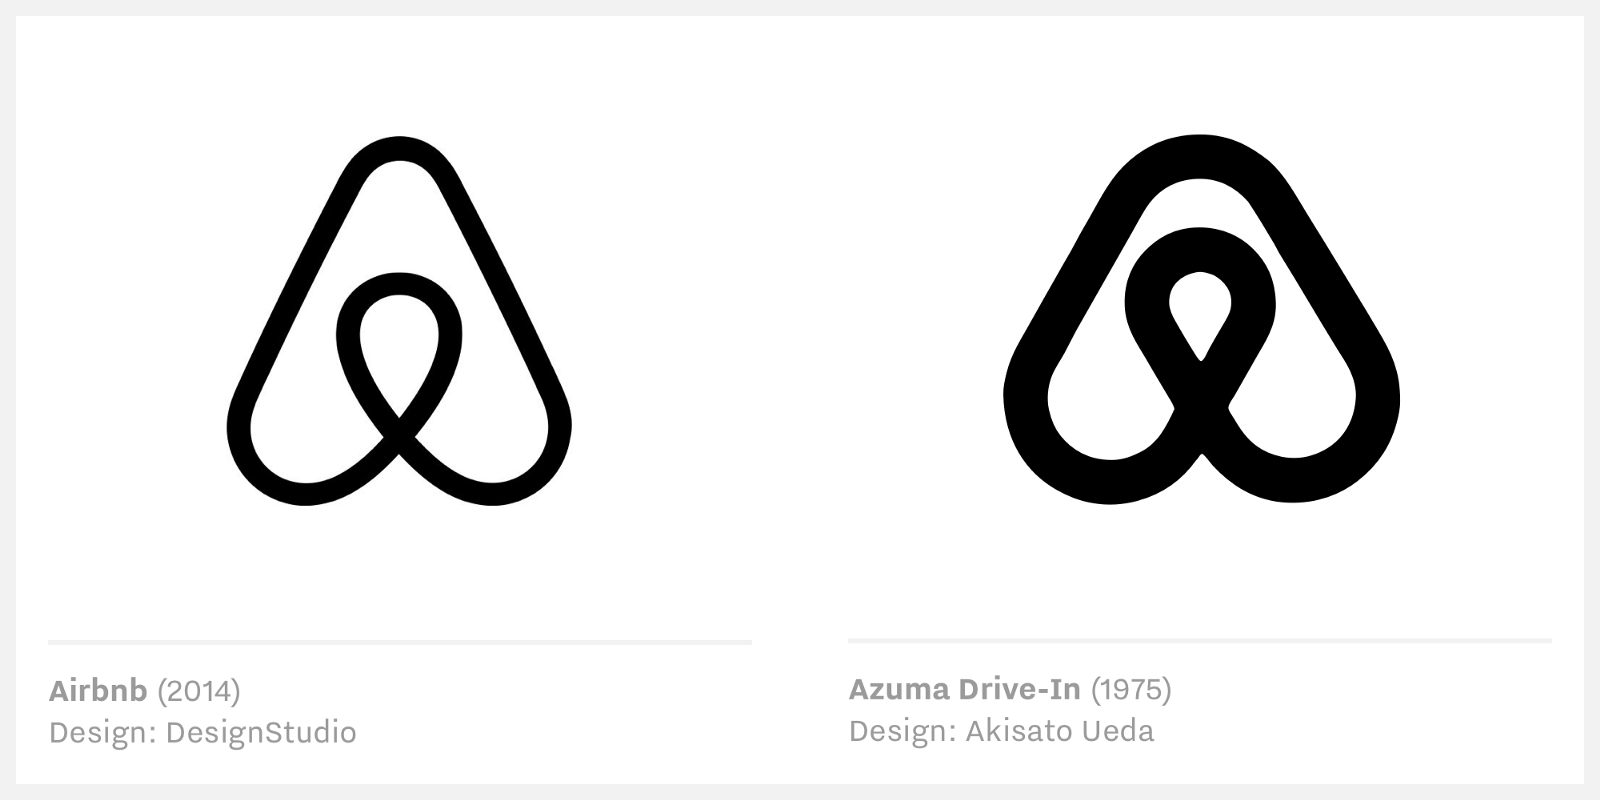 Airbnb vs Azuma Drive-In